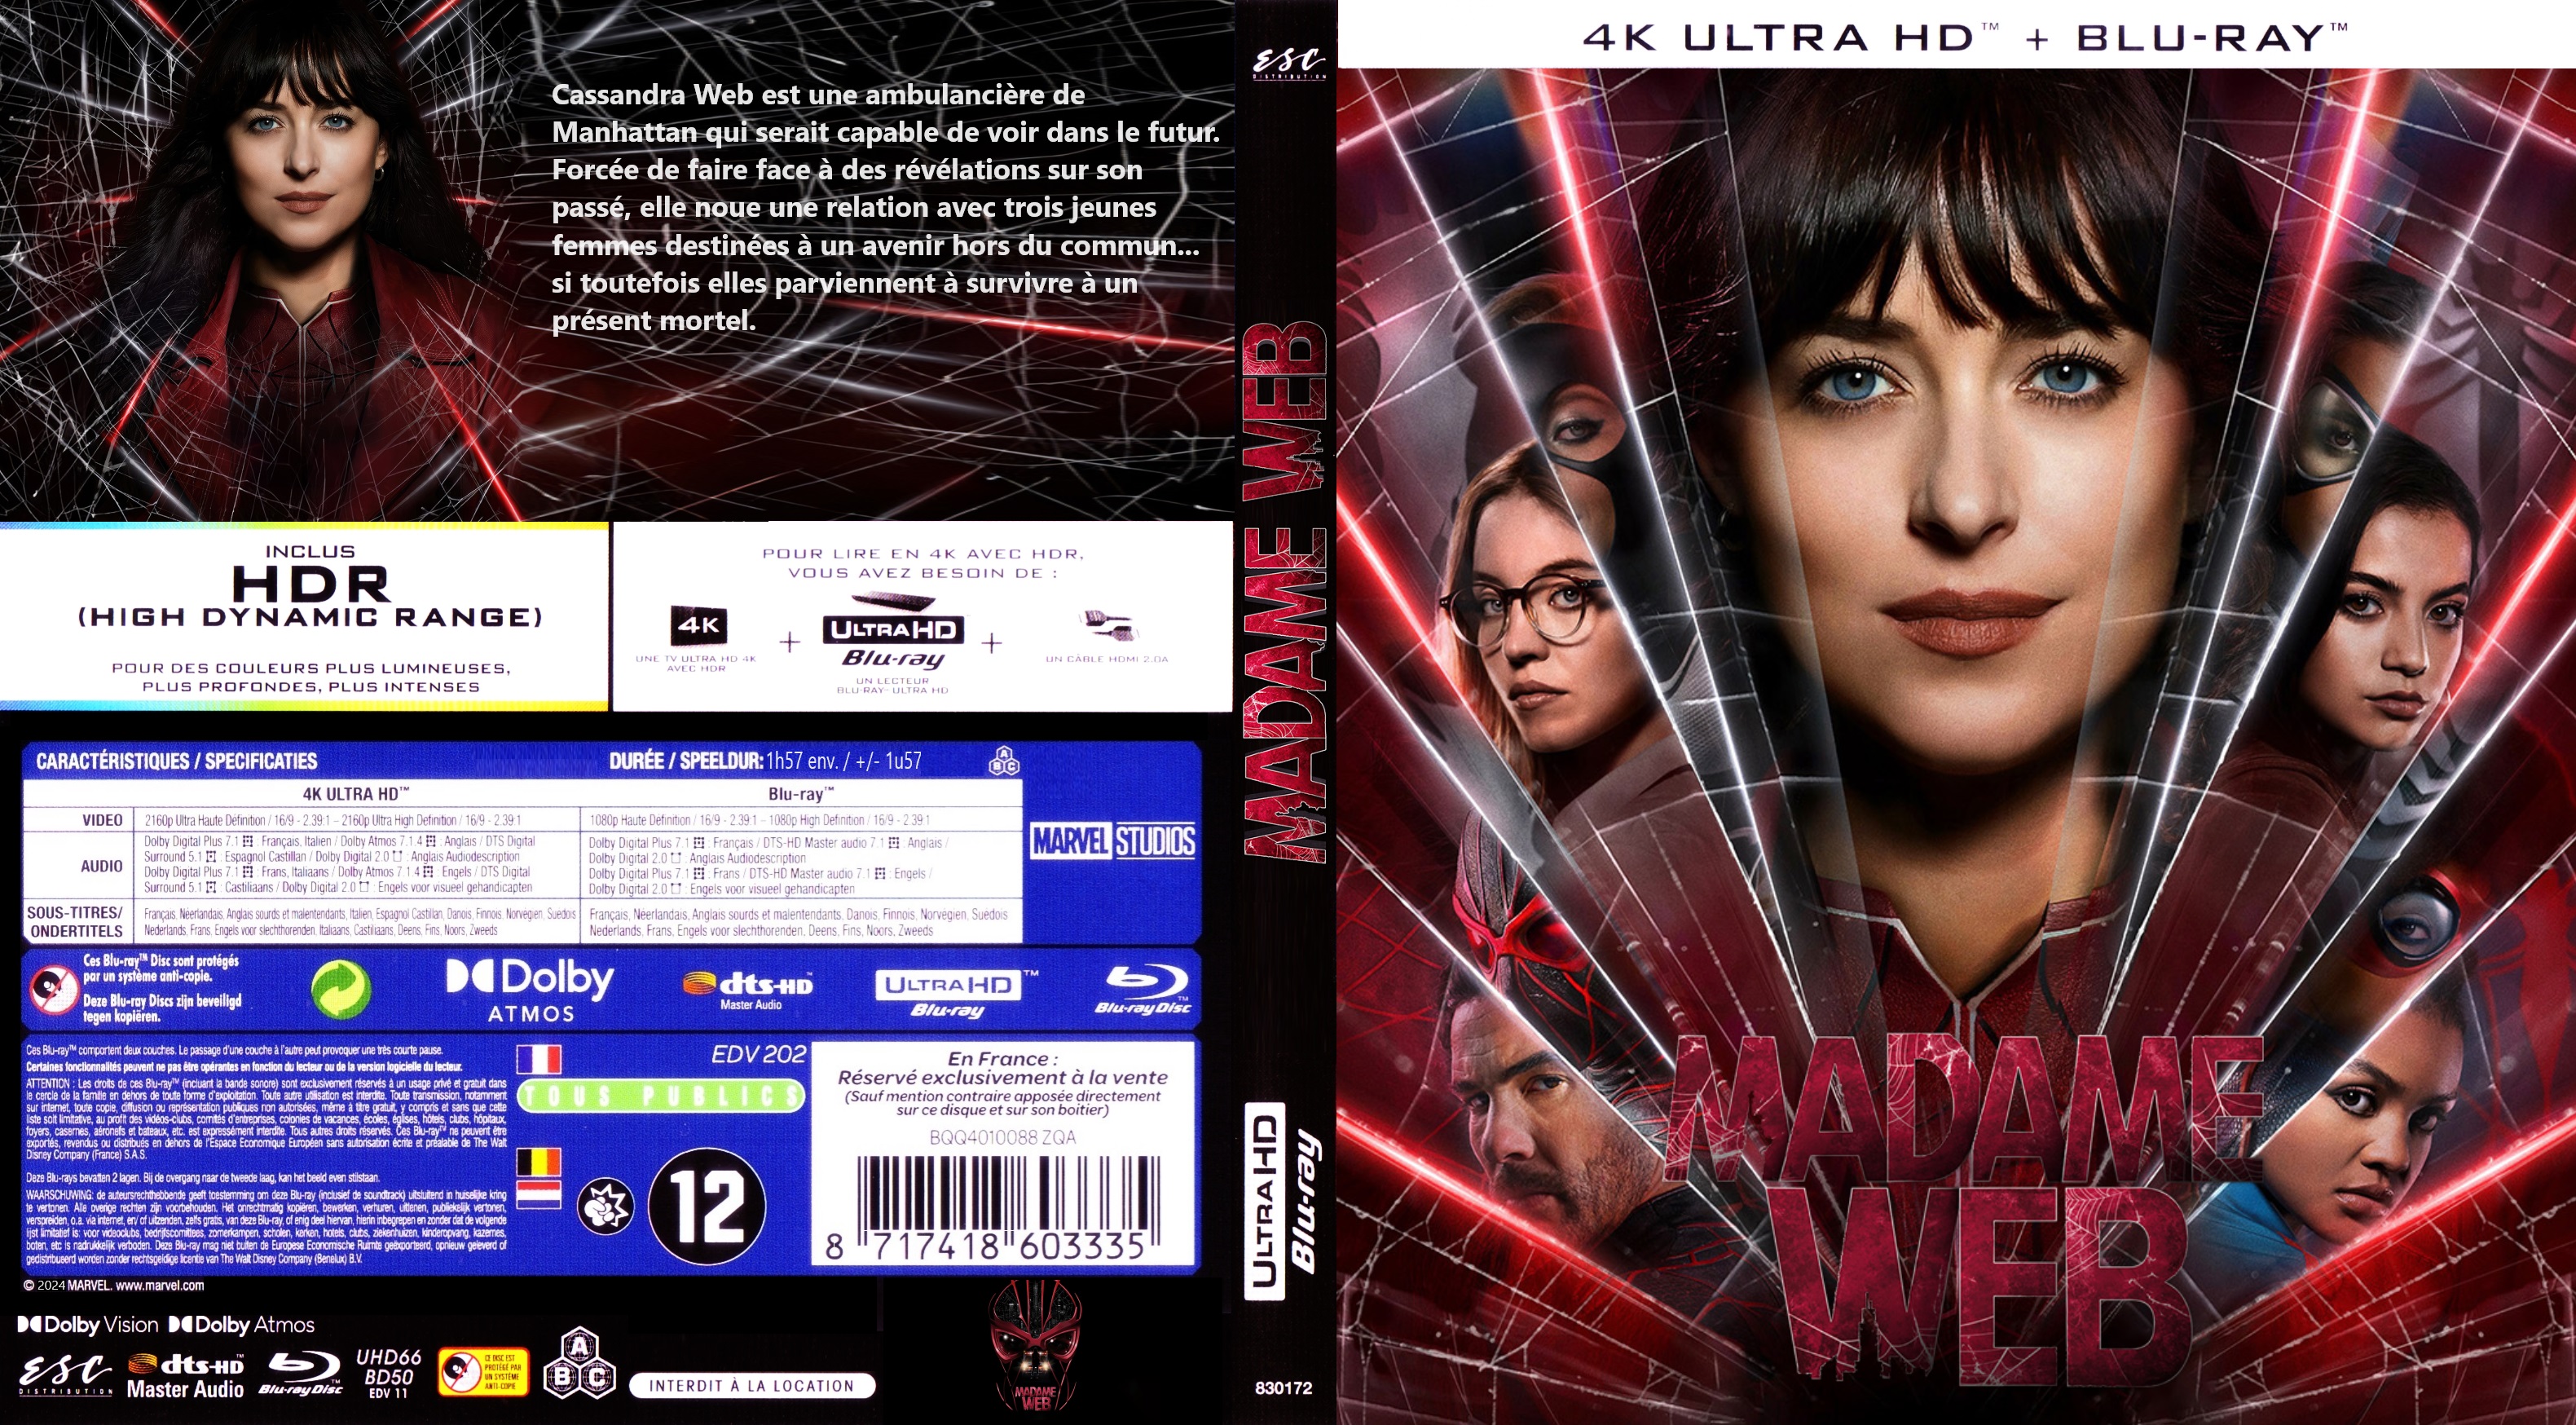 Jaquette DVD Madame Web 4K custom (BLU-RAY)